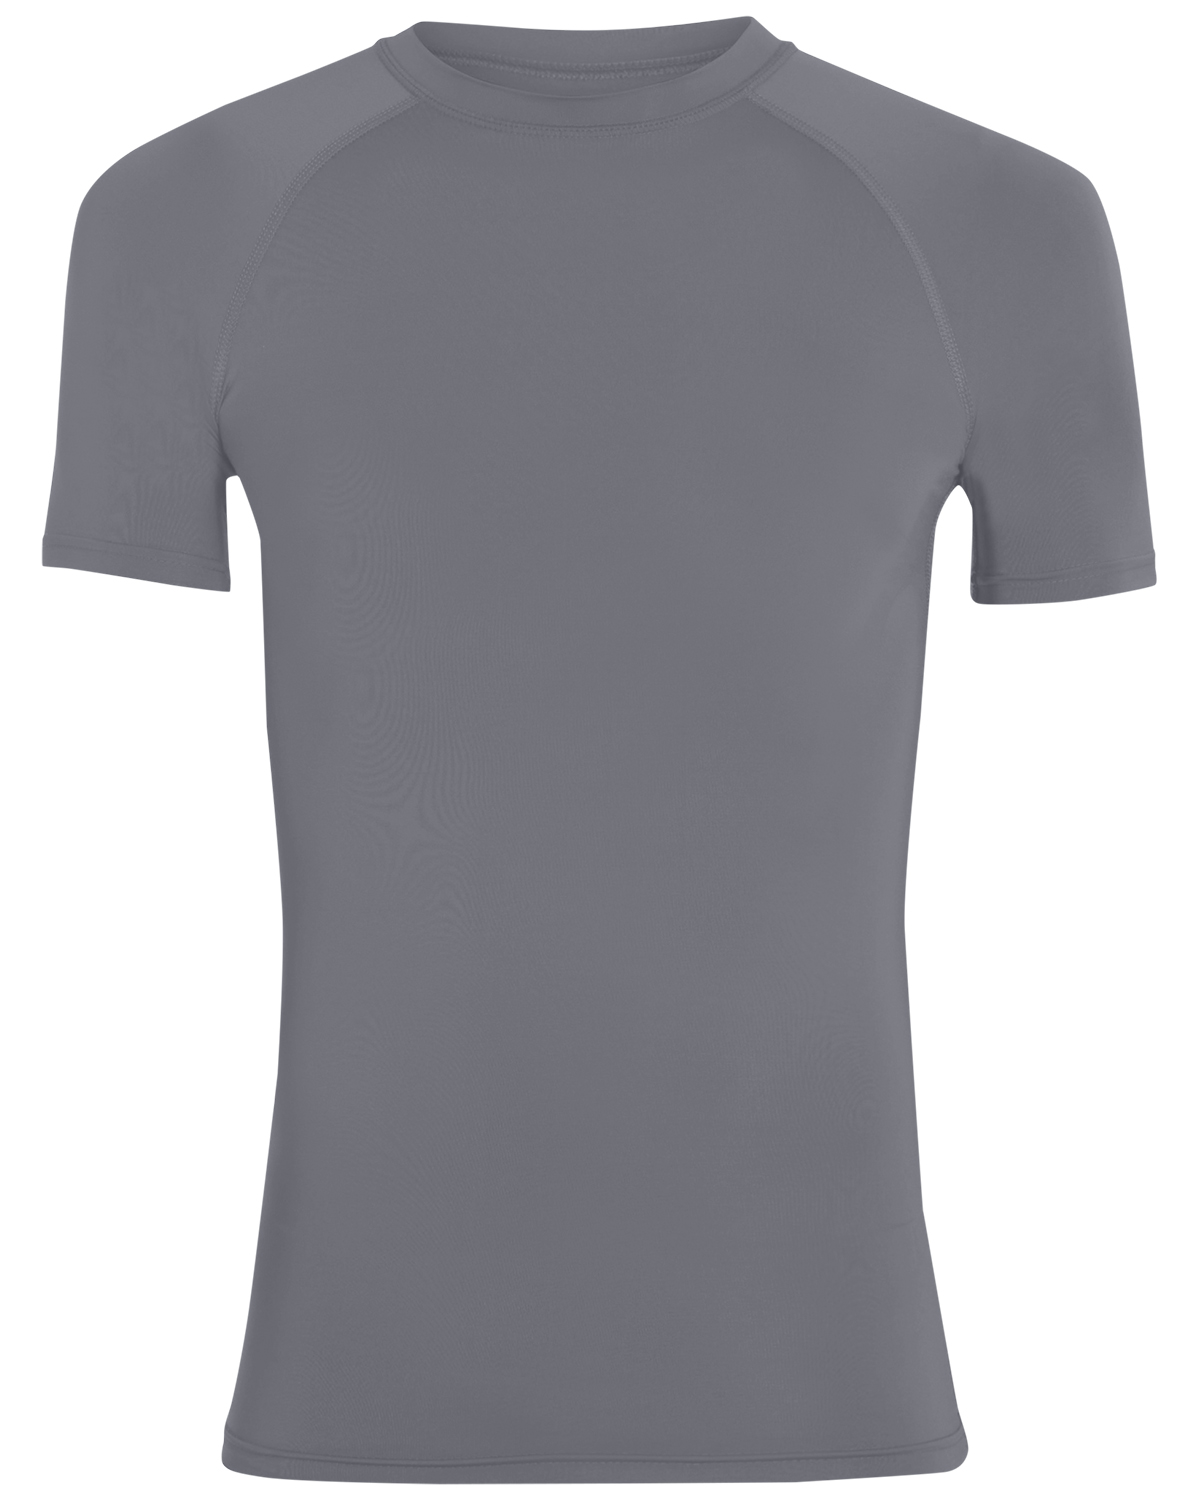 Augusta Hyperform Sleeveless Compression Shirt